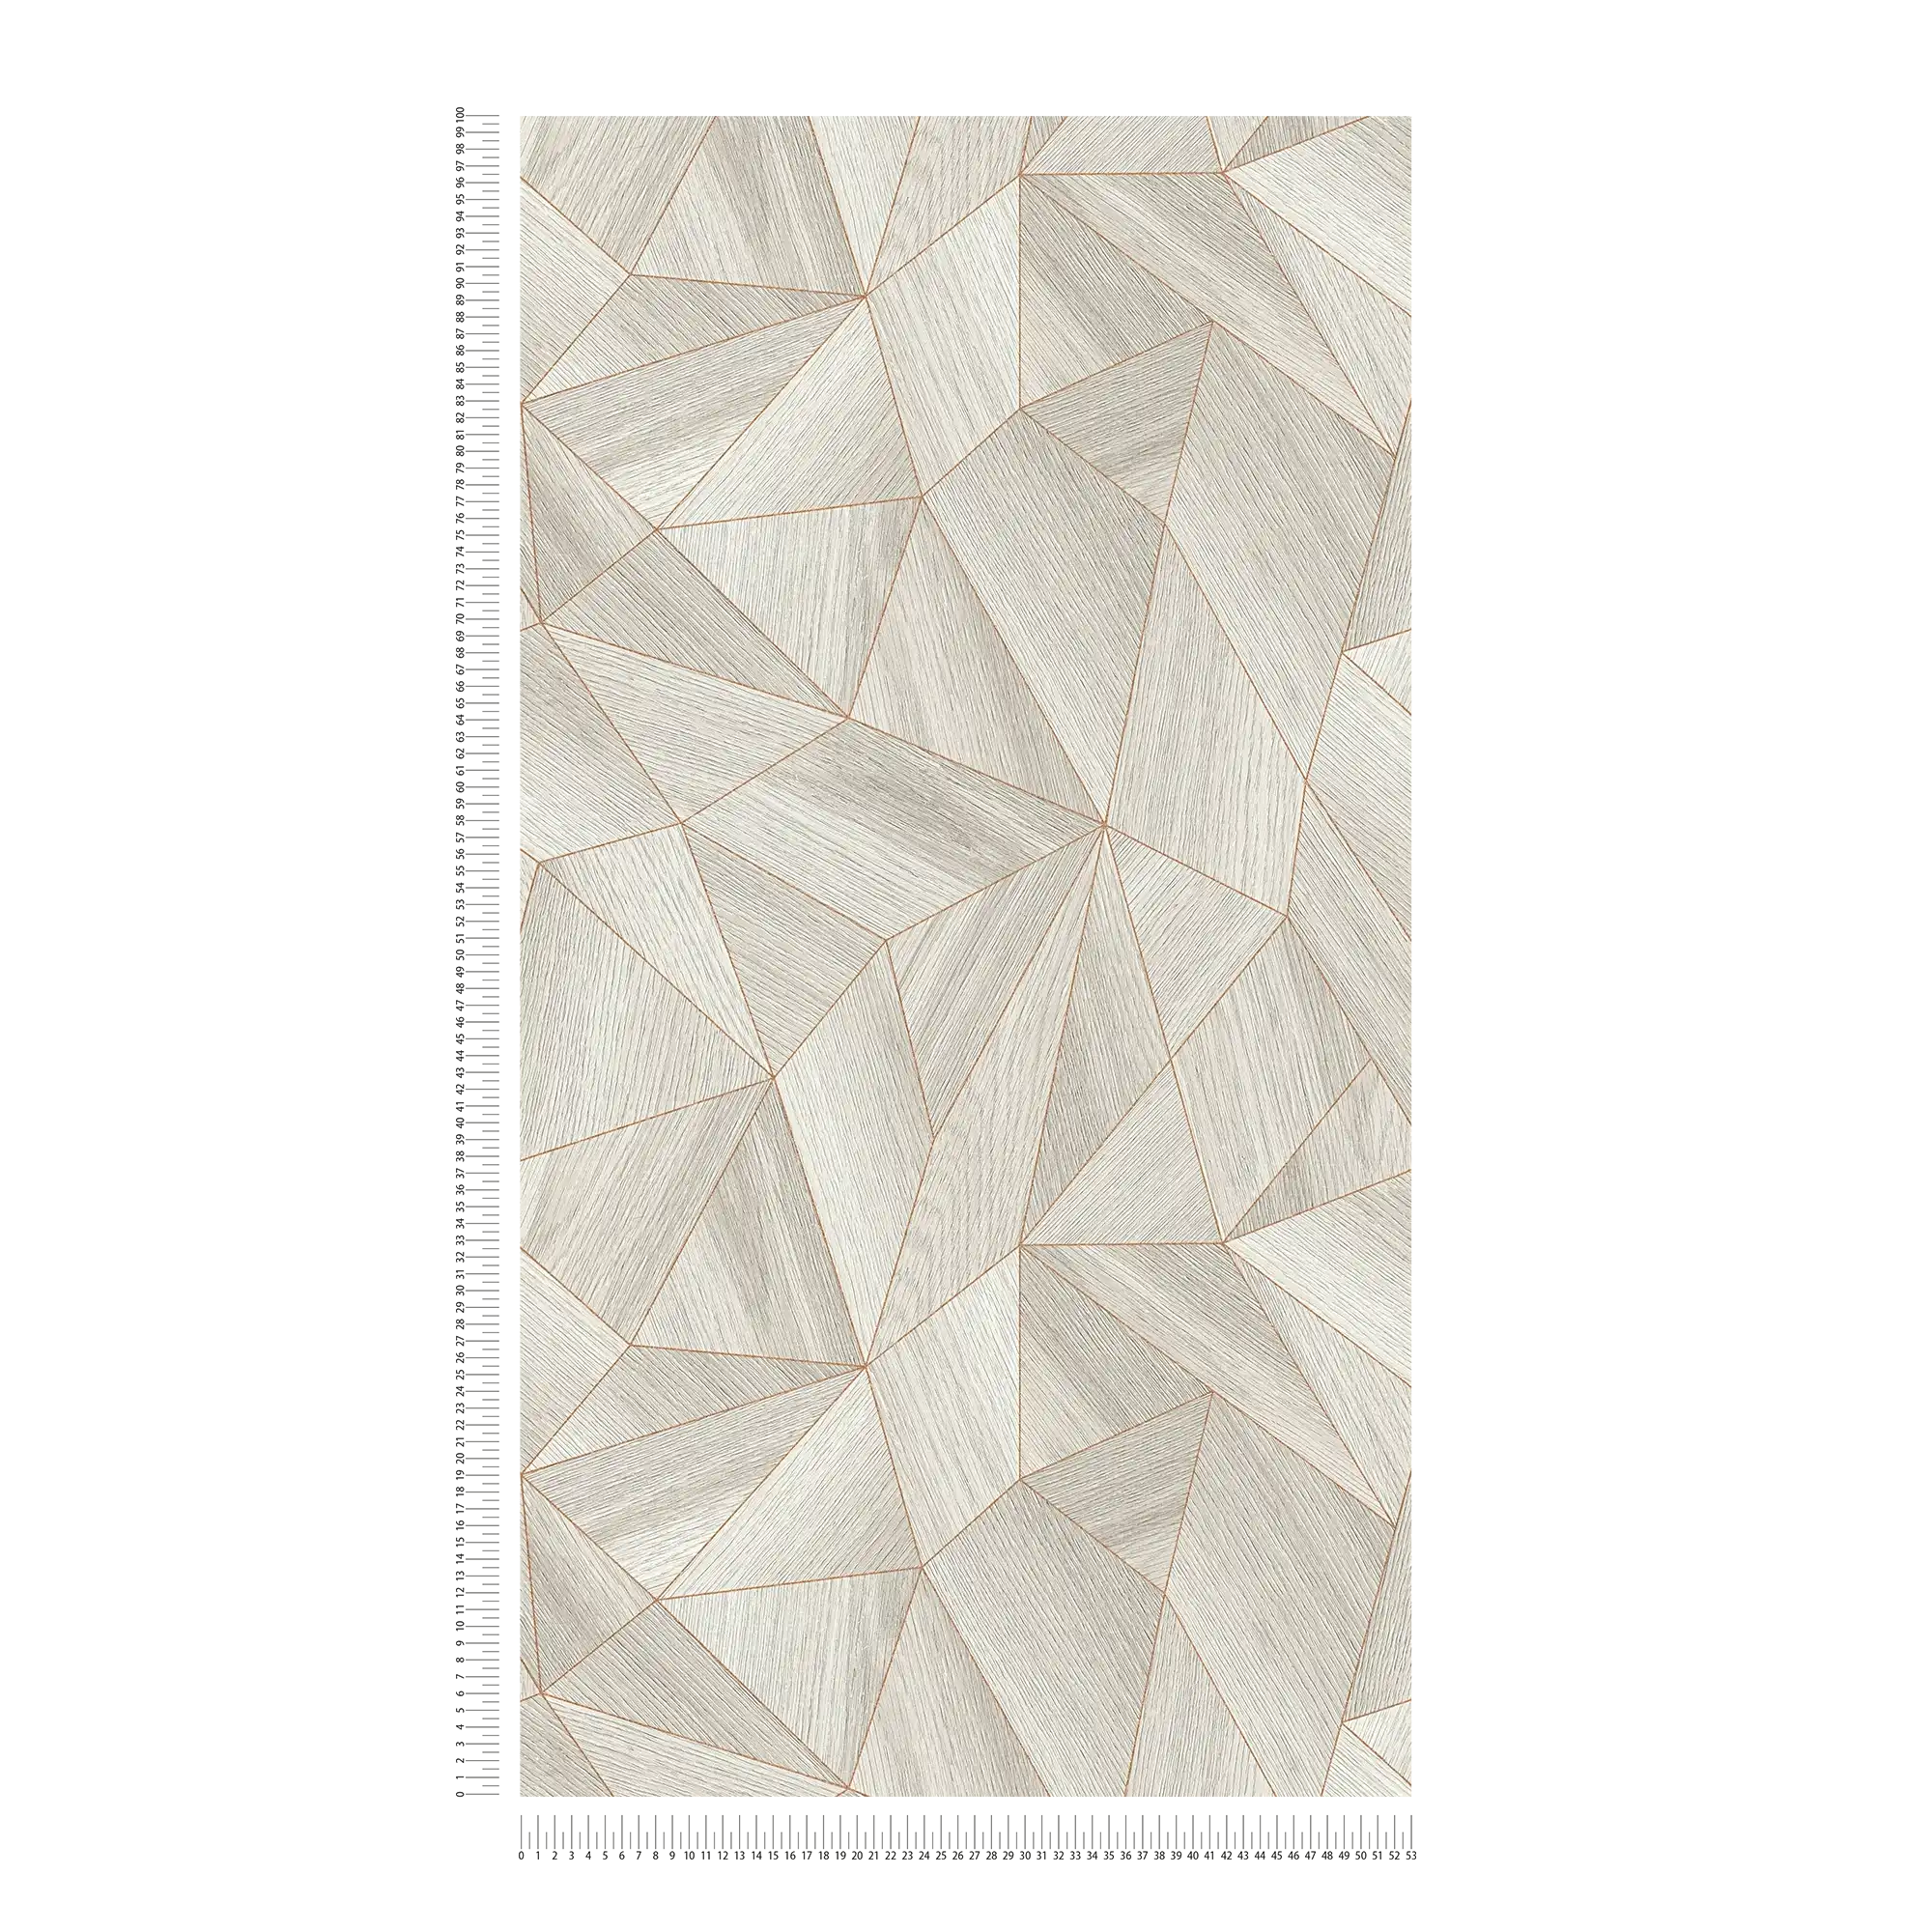             Holzoptik Tapete modernes Design & Metallic-Effekt – Grau, Gold
        